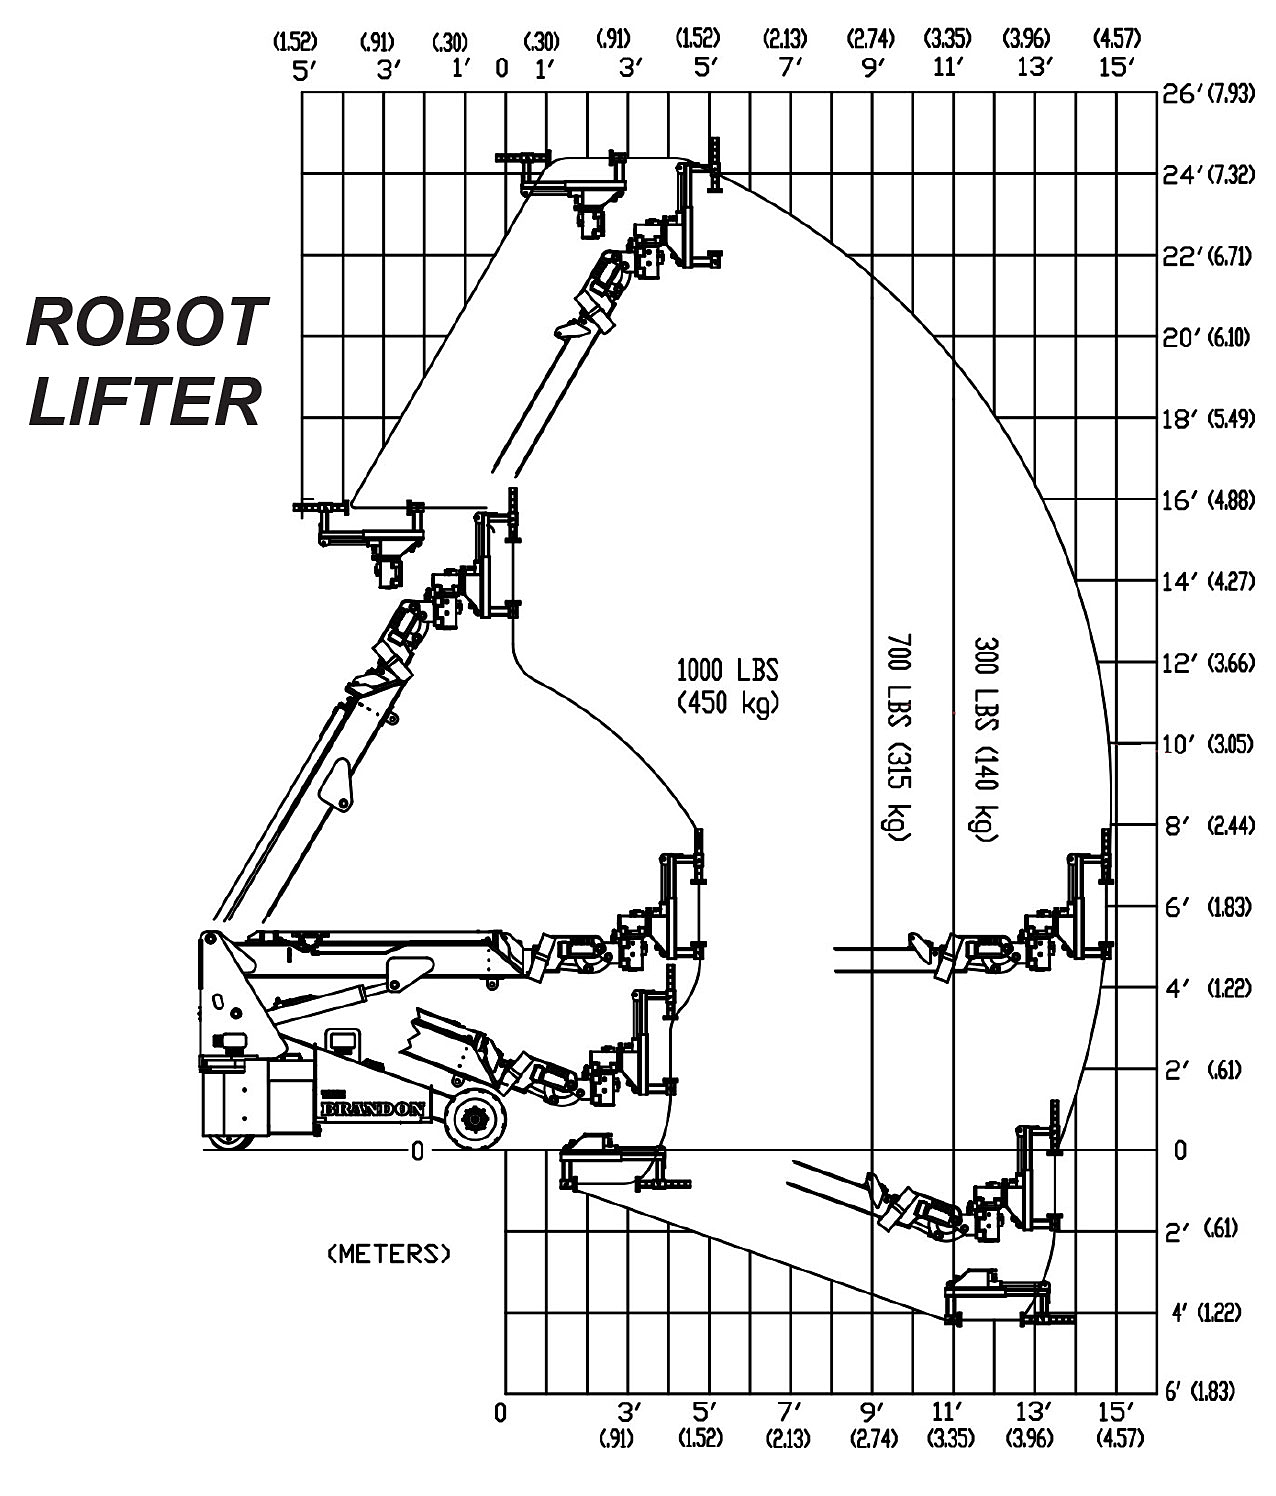 The Brandon 6 Robot Lifter Load Capacity